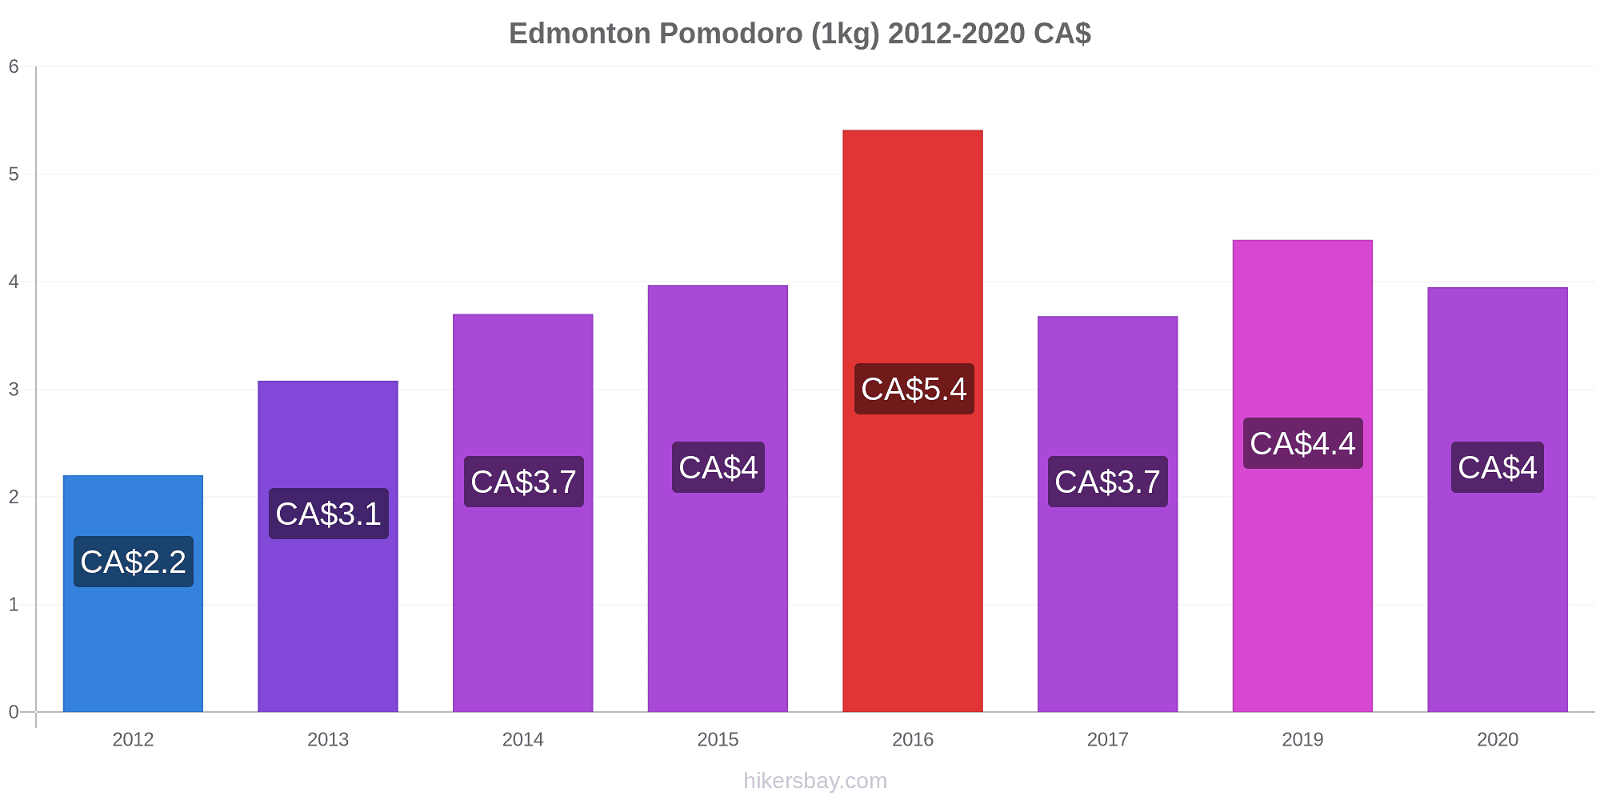 Edmonton variazioni di prezzo Pomodoro (1kg) hikersbay.com